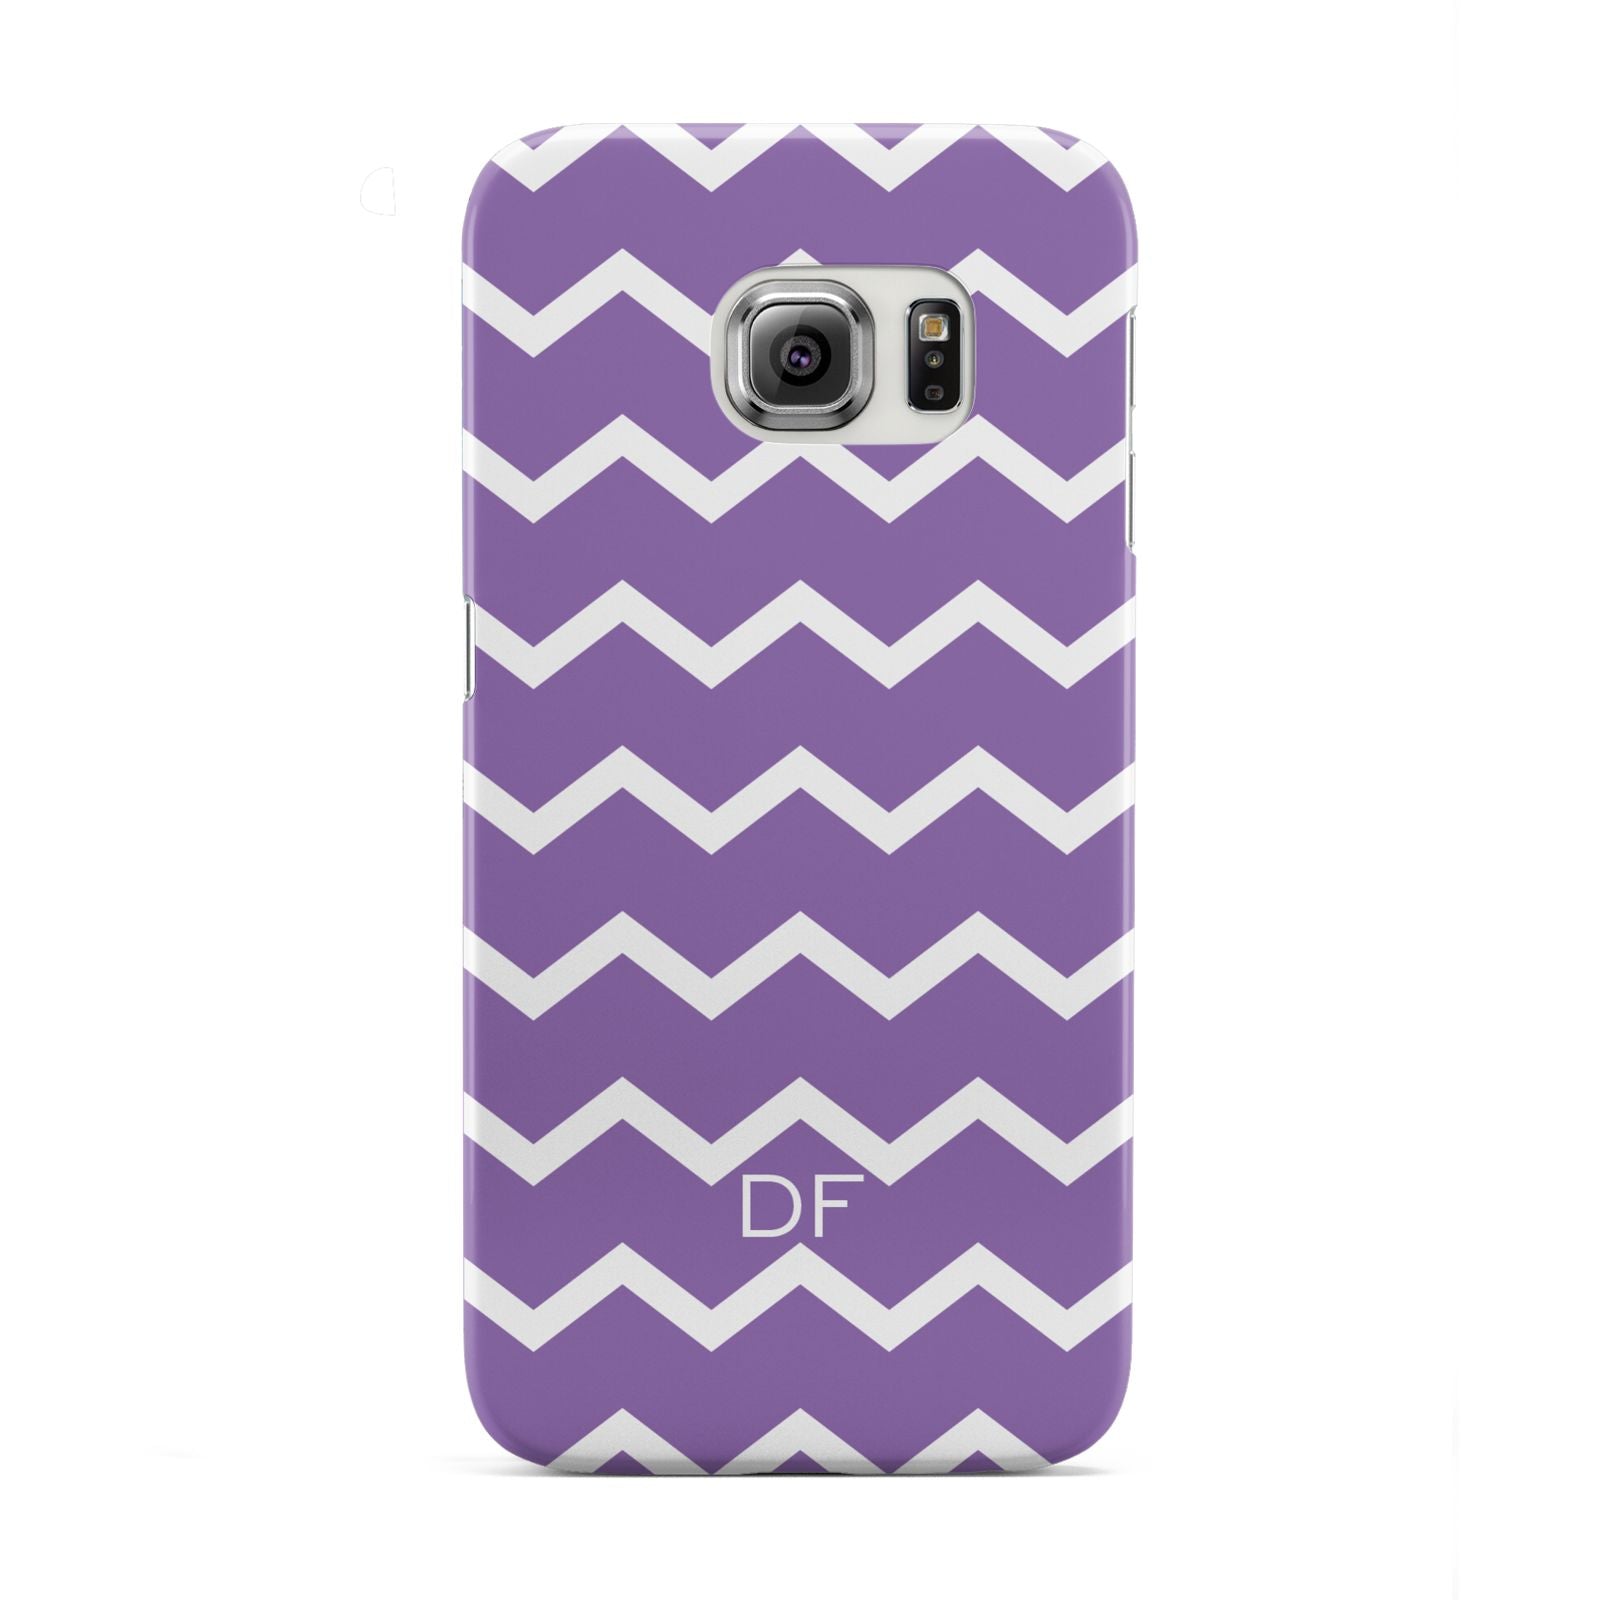 Personalised Chevron Purple Samsung Galaxy S6 Edge Case